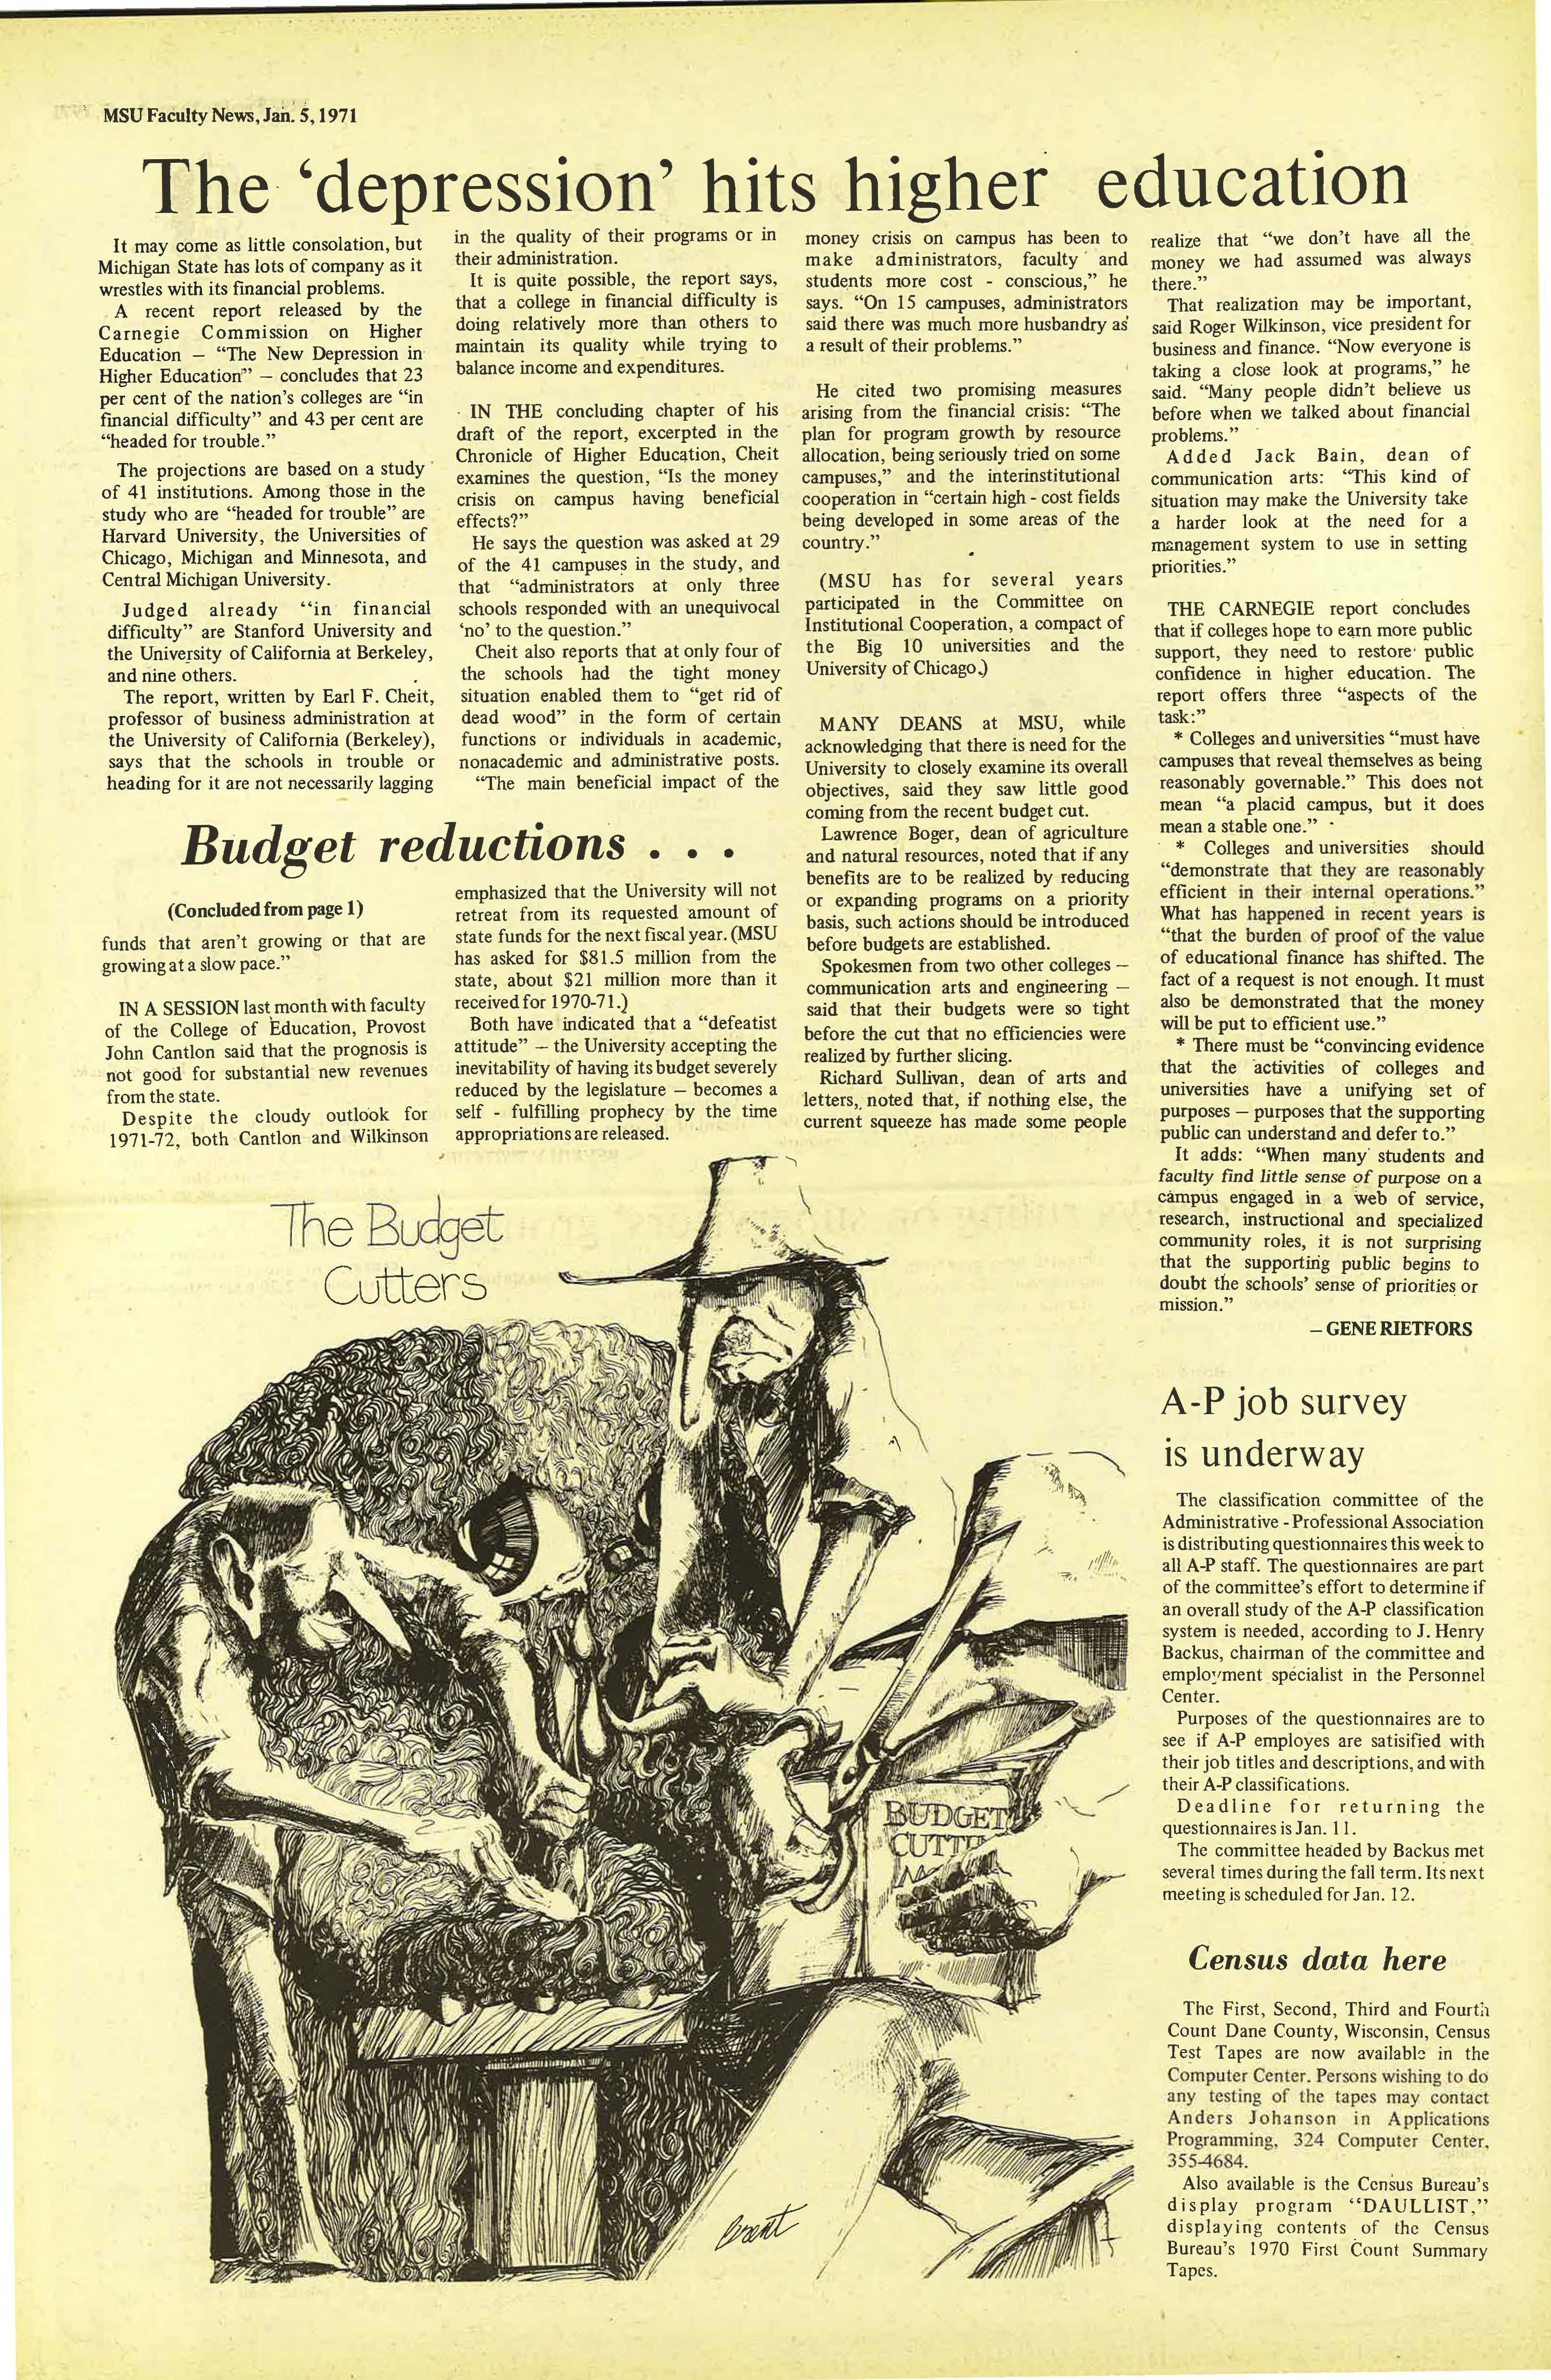 MSU News Bulletin, vol. 2, No. 19, March 2, 1971